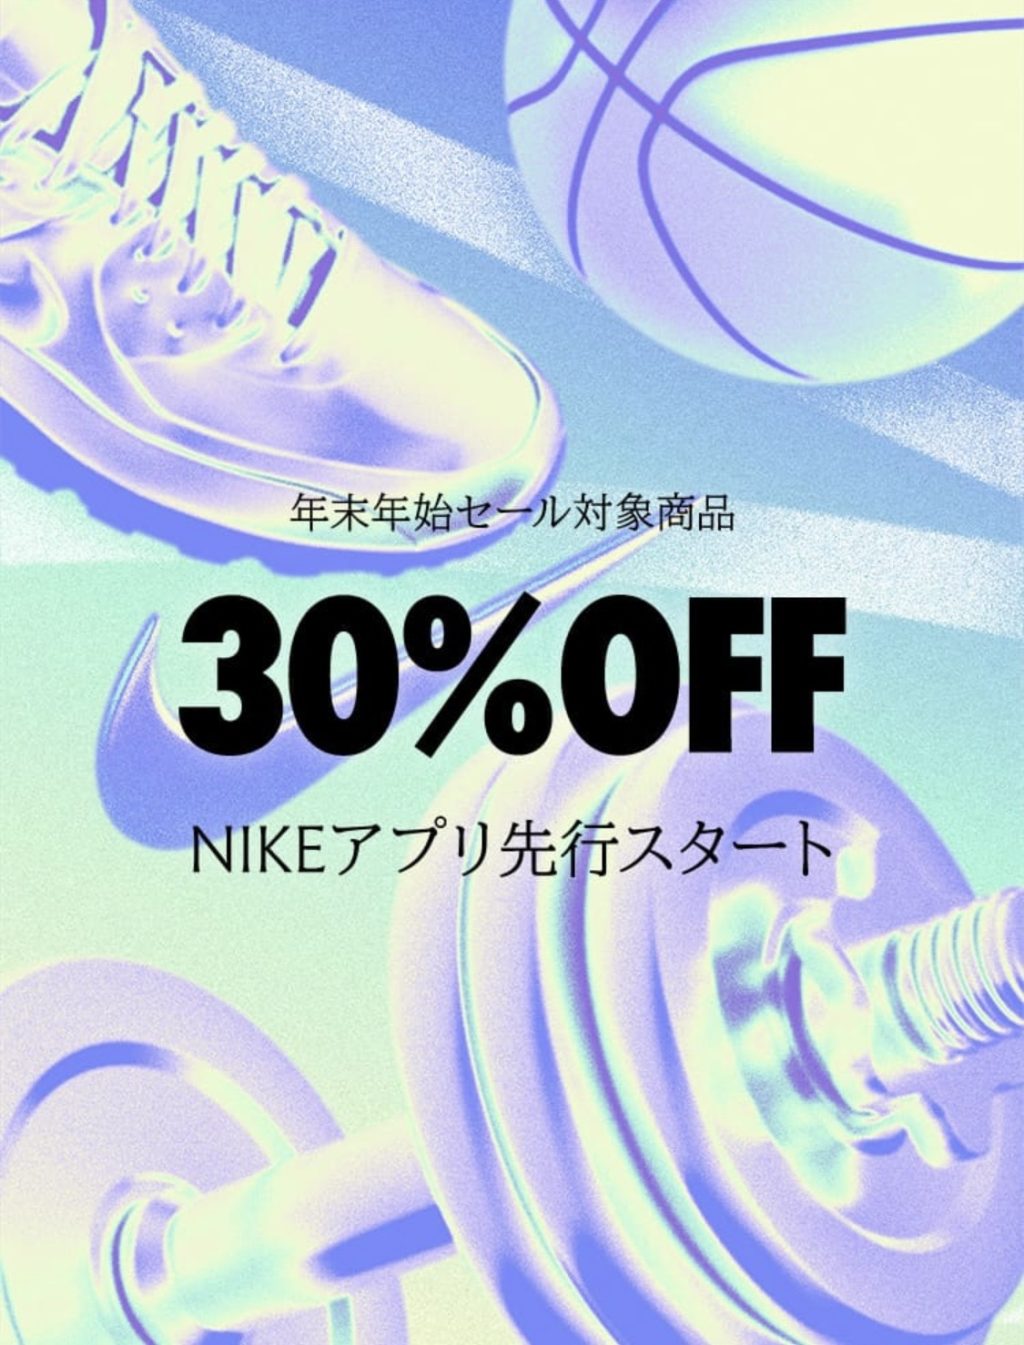 nike-online-store-new-year-sale-start-20221226